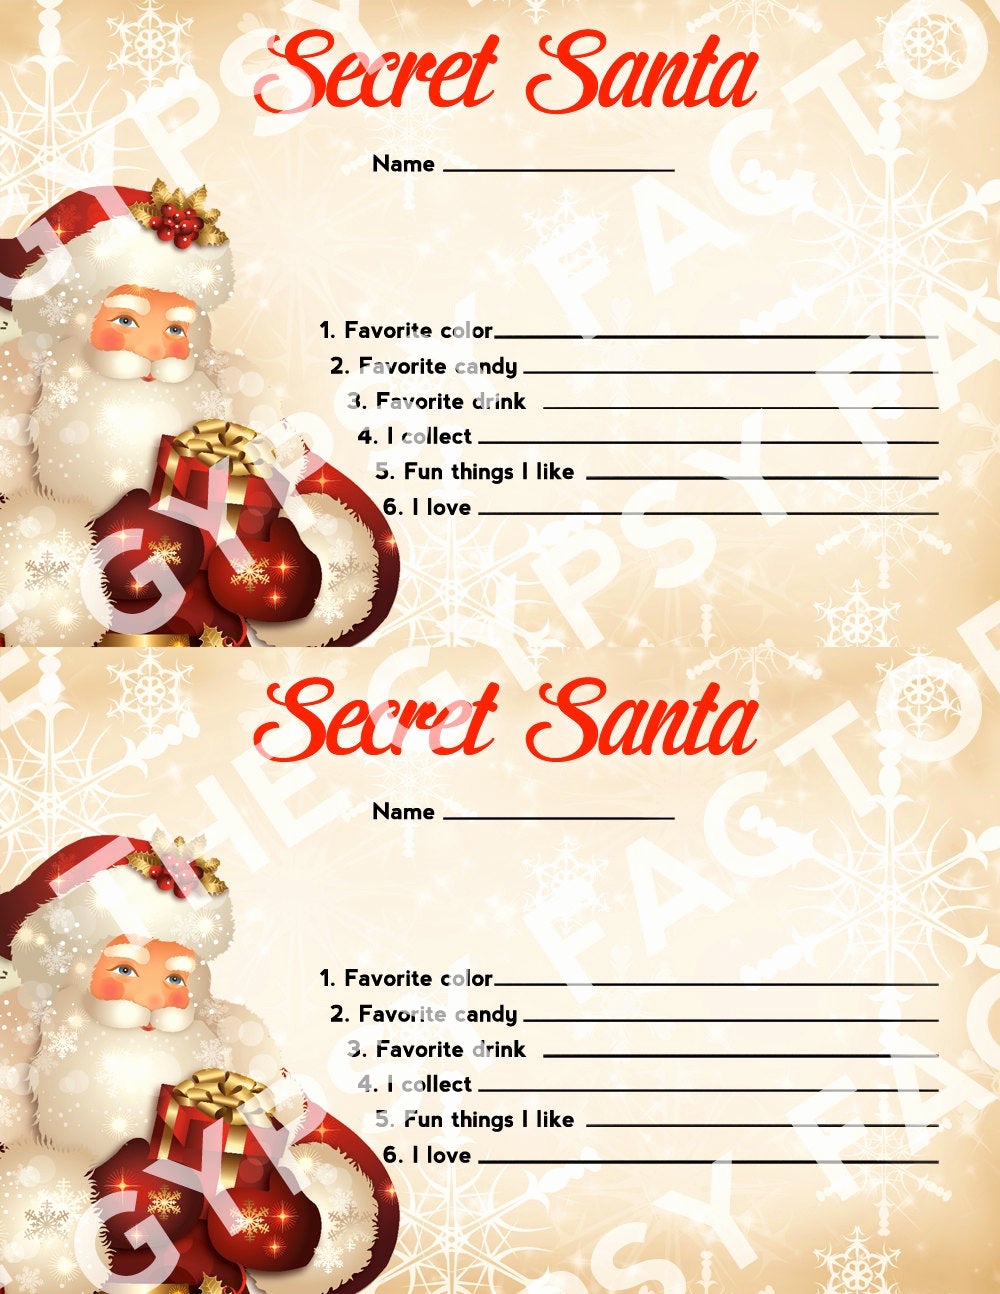 Secret Santa Invitation Template Lovely Secret Santa Questionnaire Invitation form Gift Ideas